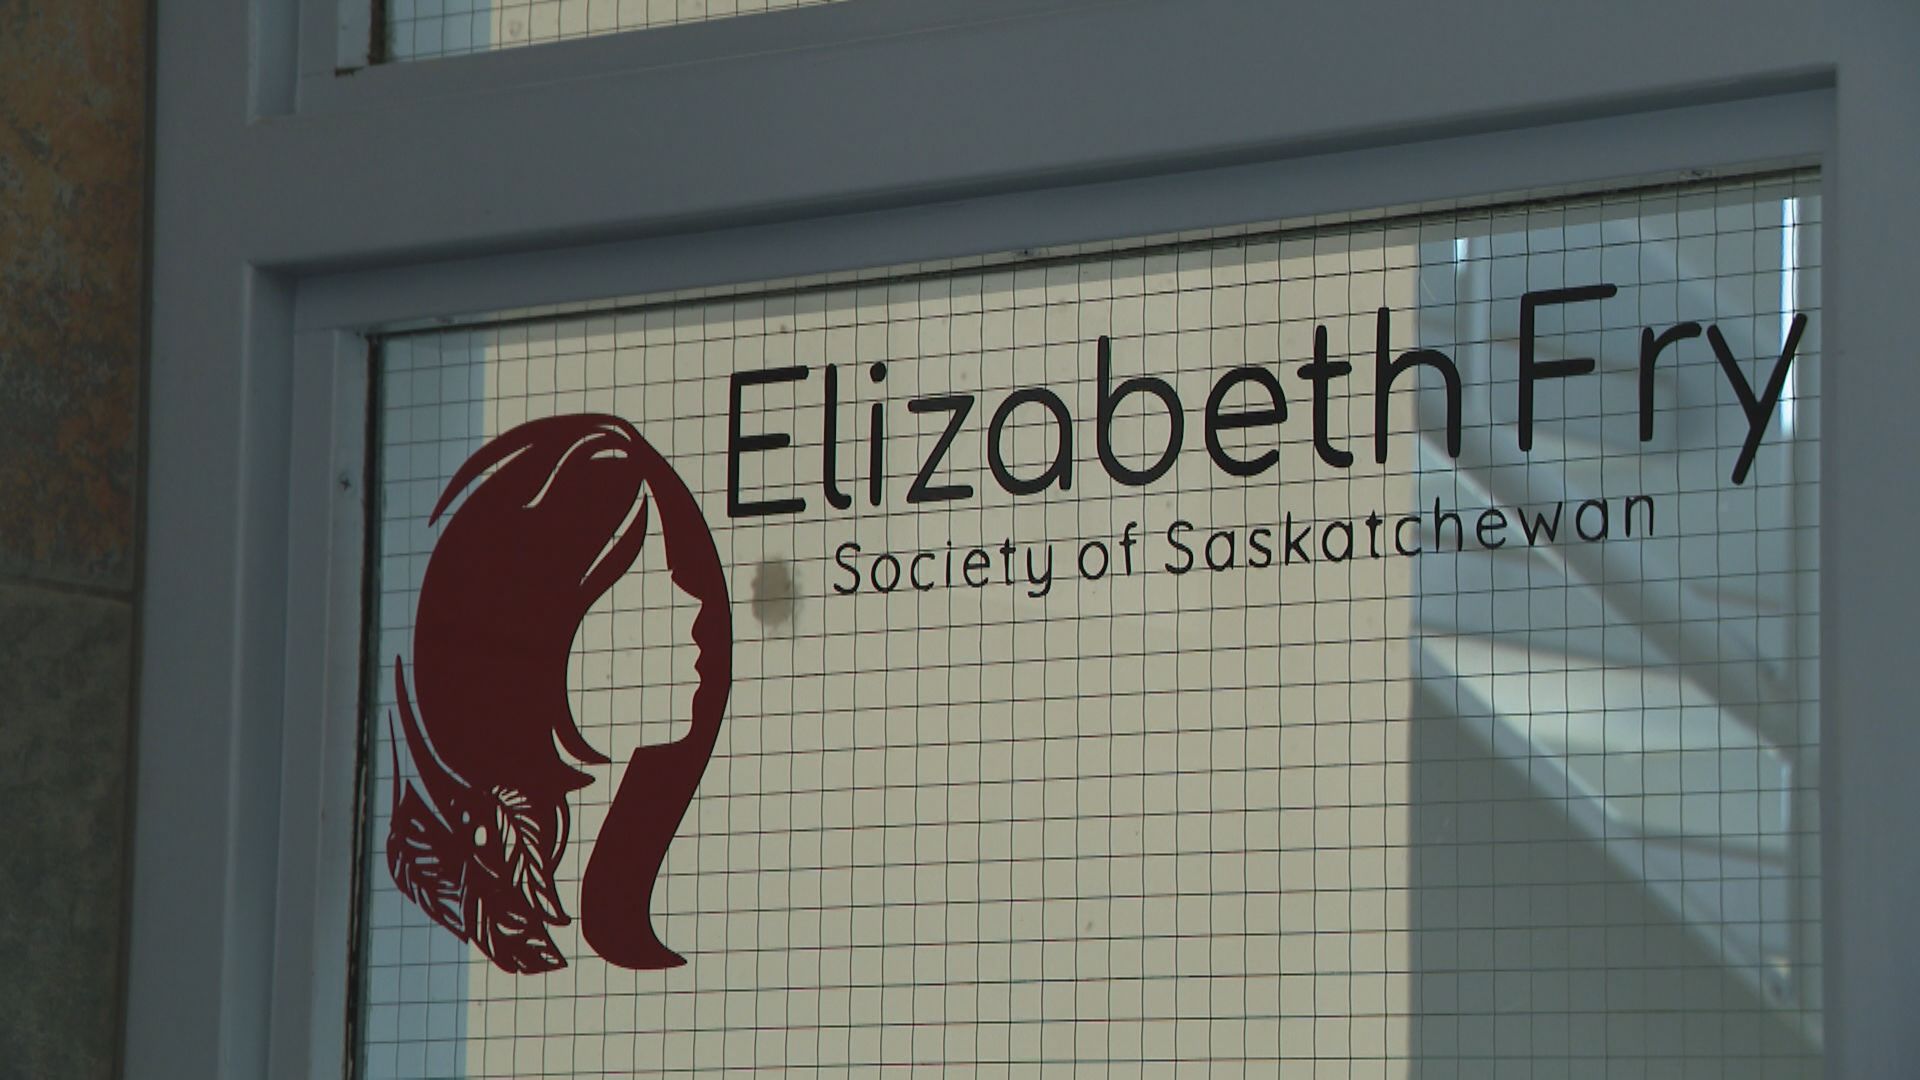 Elizabeth Fry Society in Saskatoon starting programs, donation drive at new location